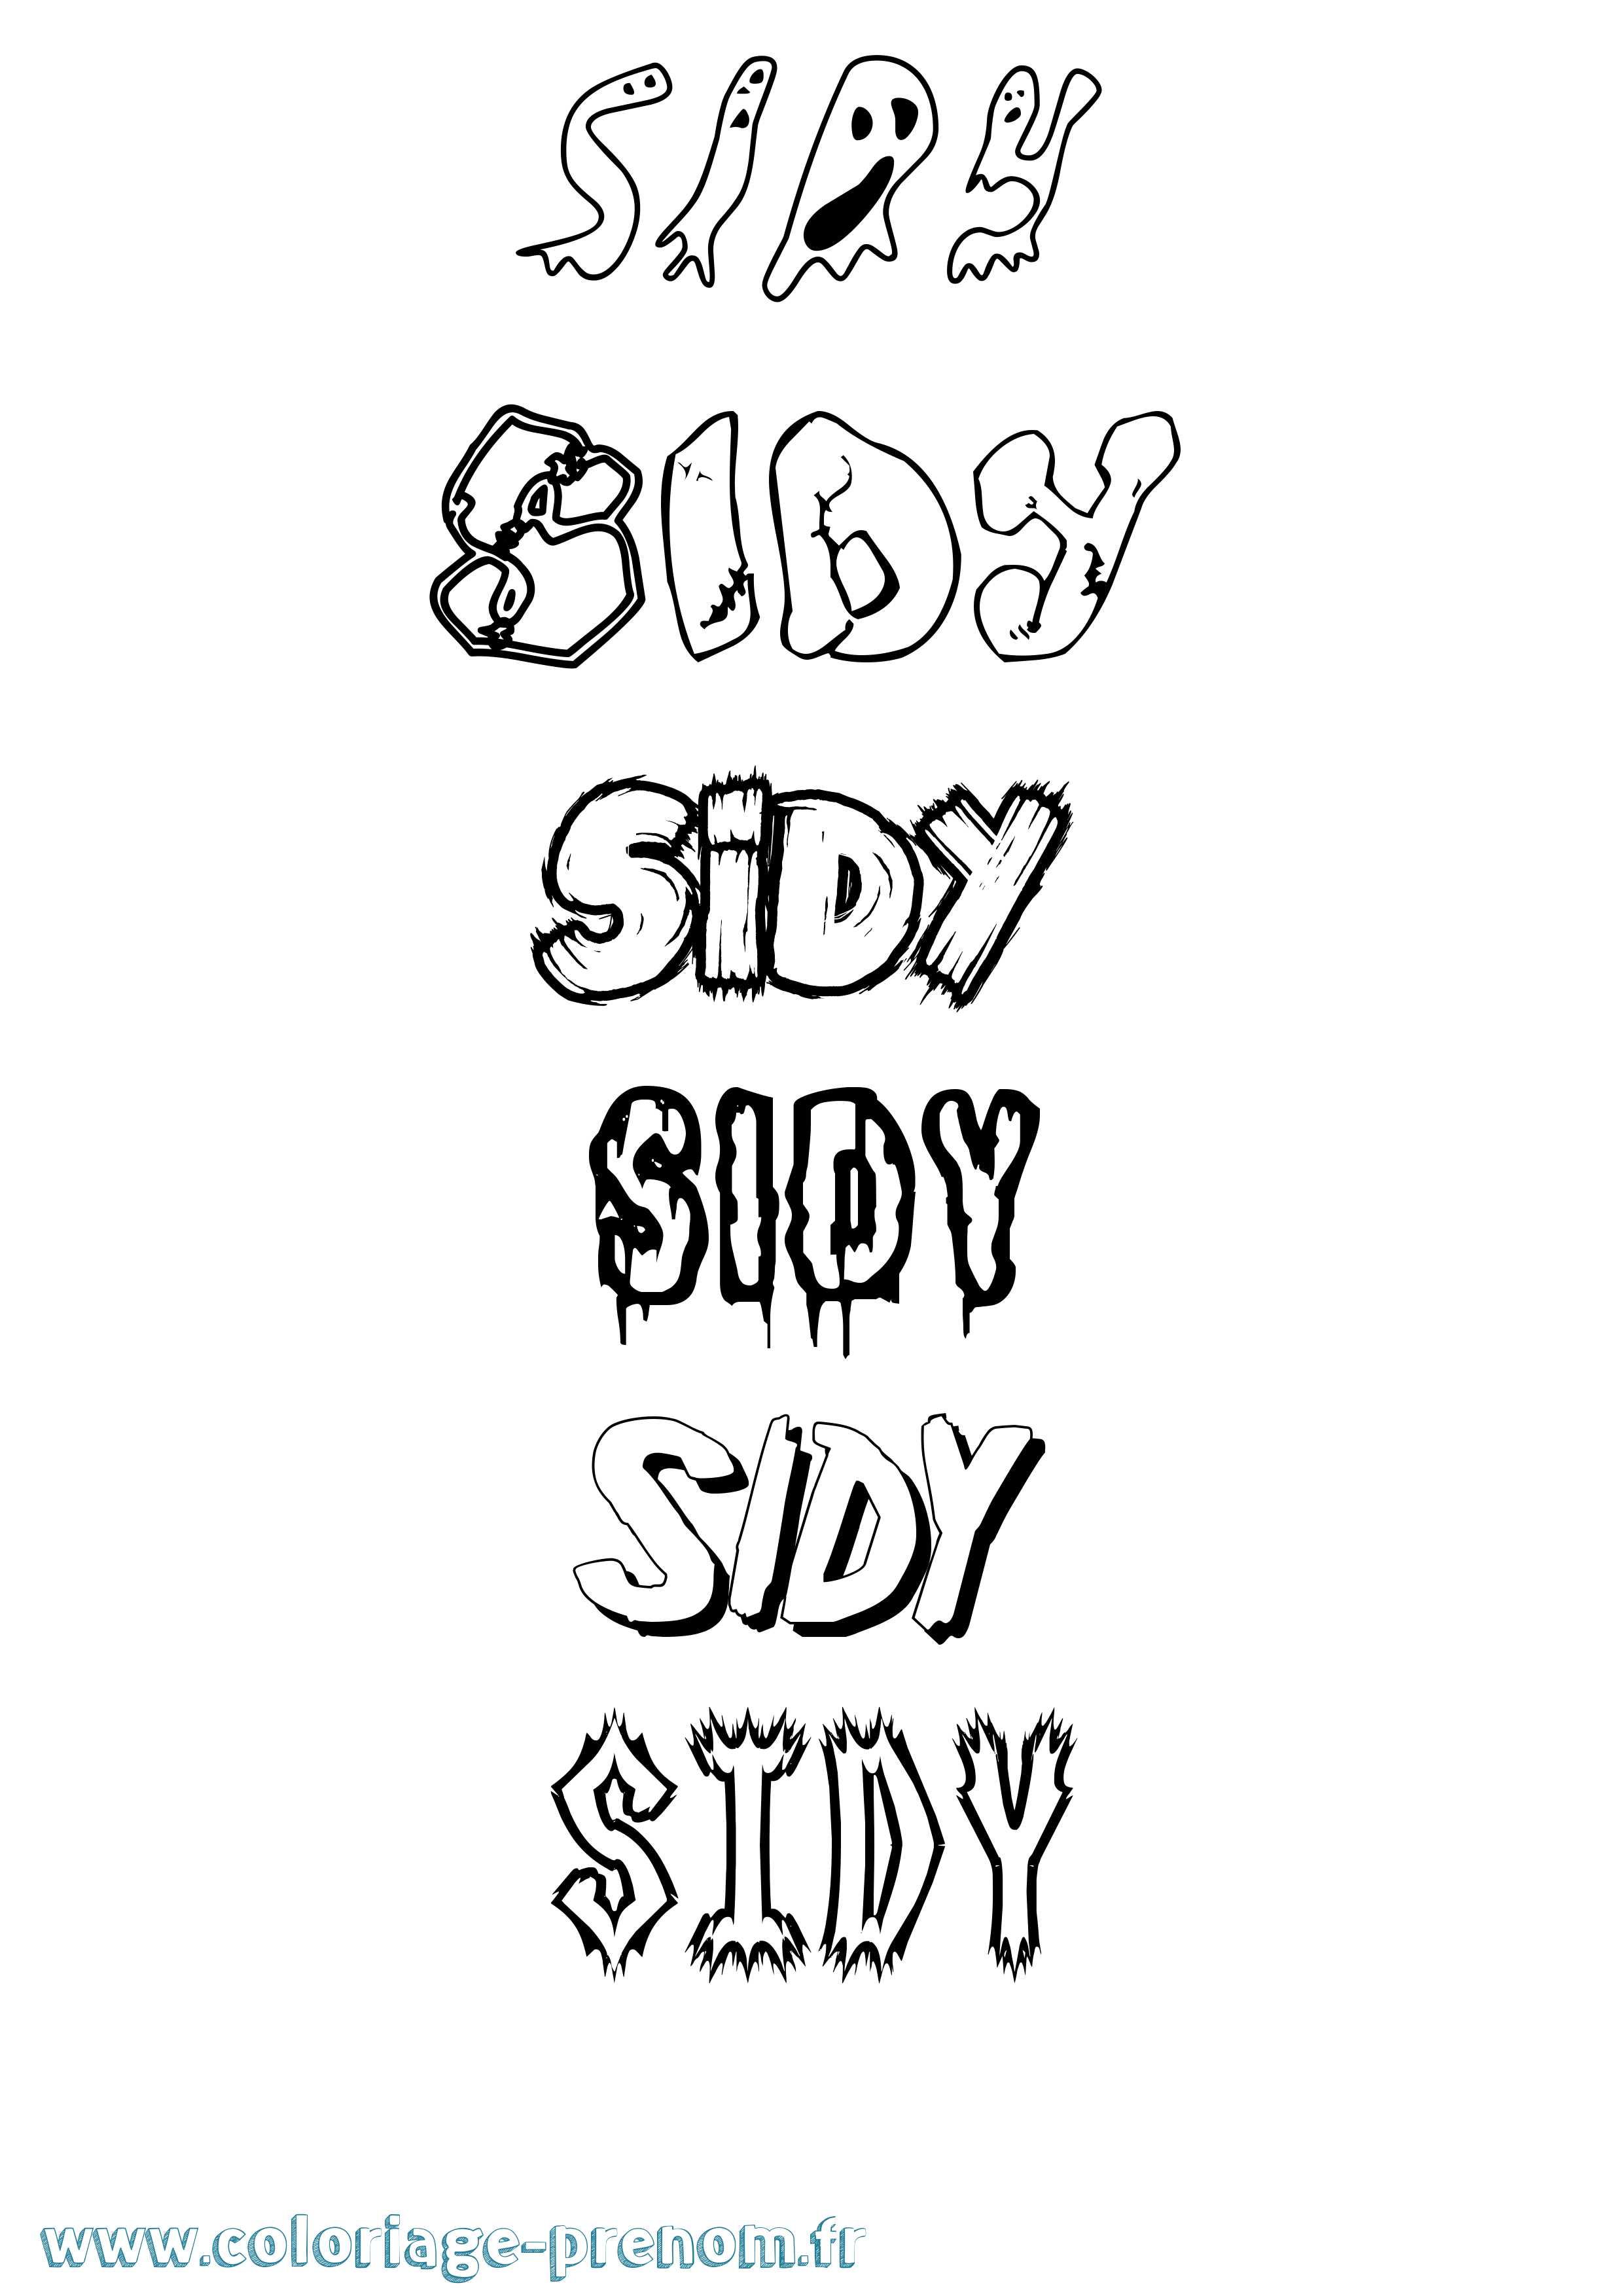 Coloriage prénom Sidy